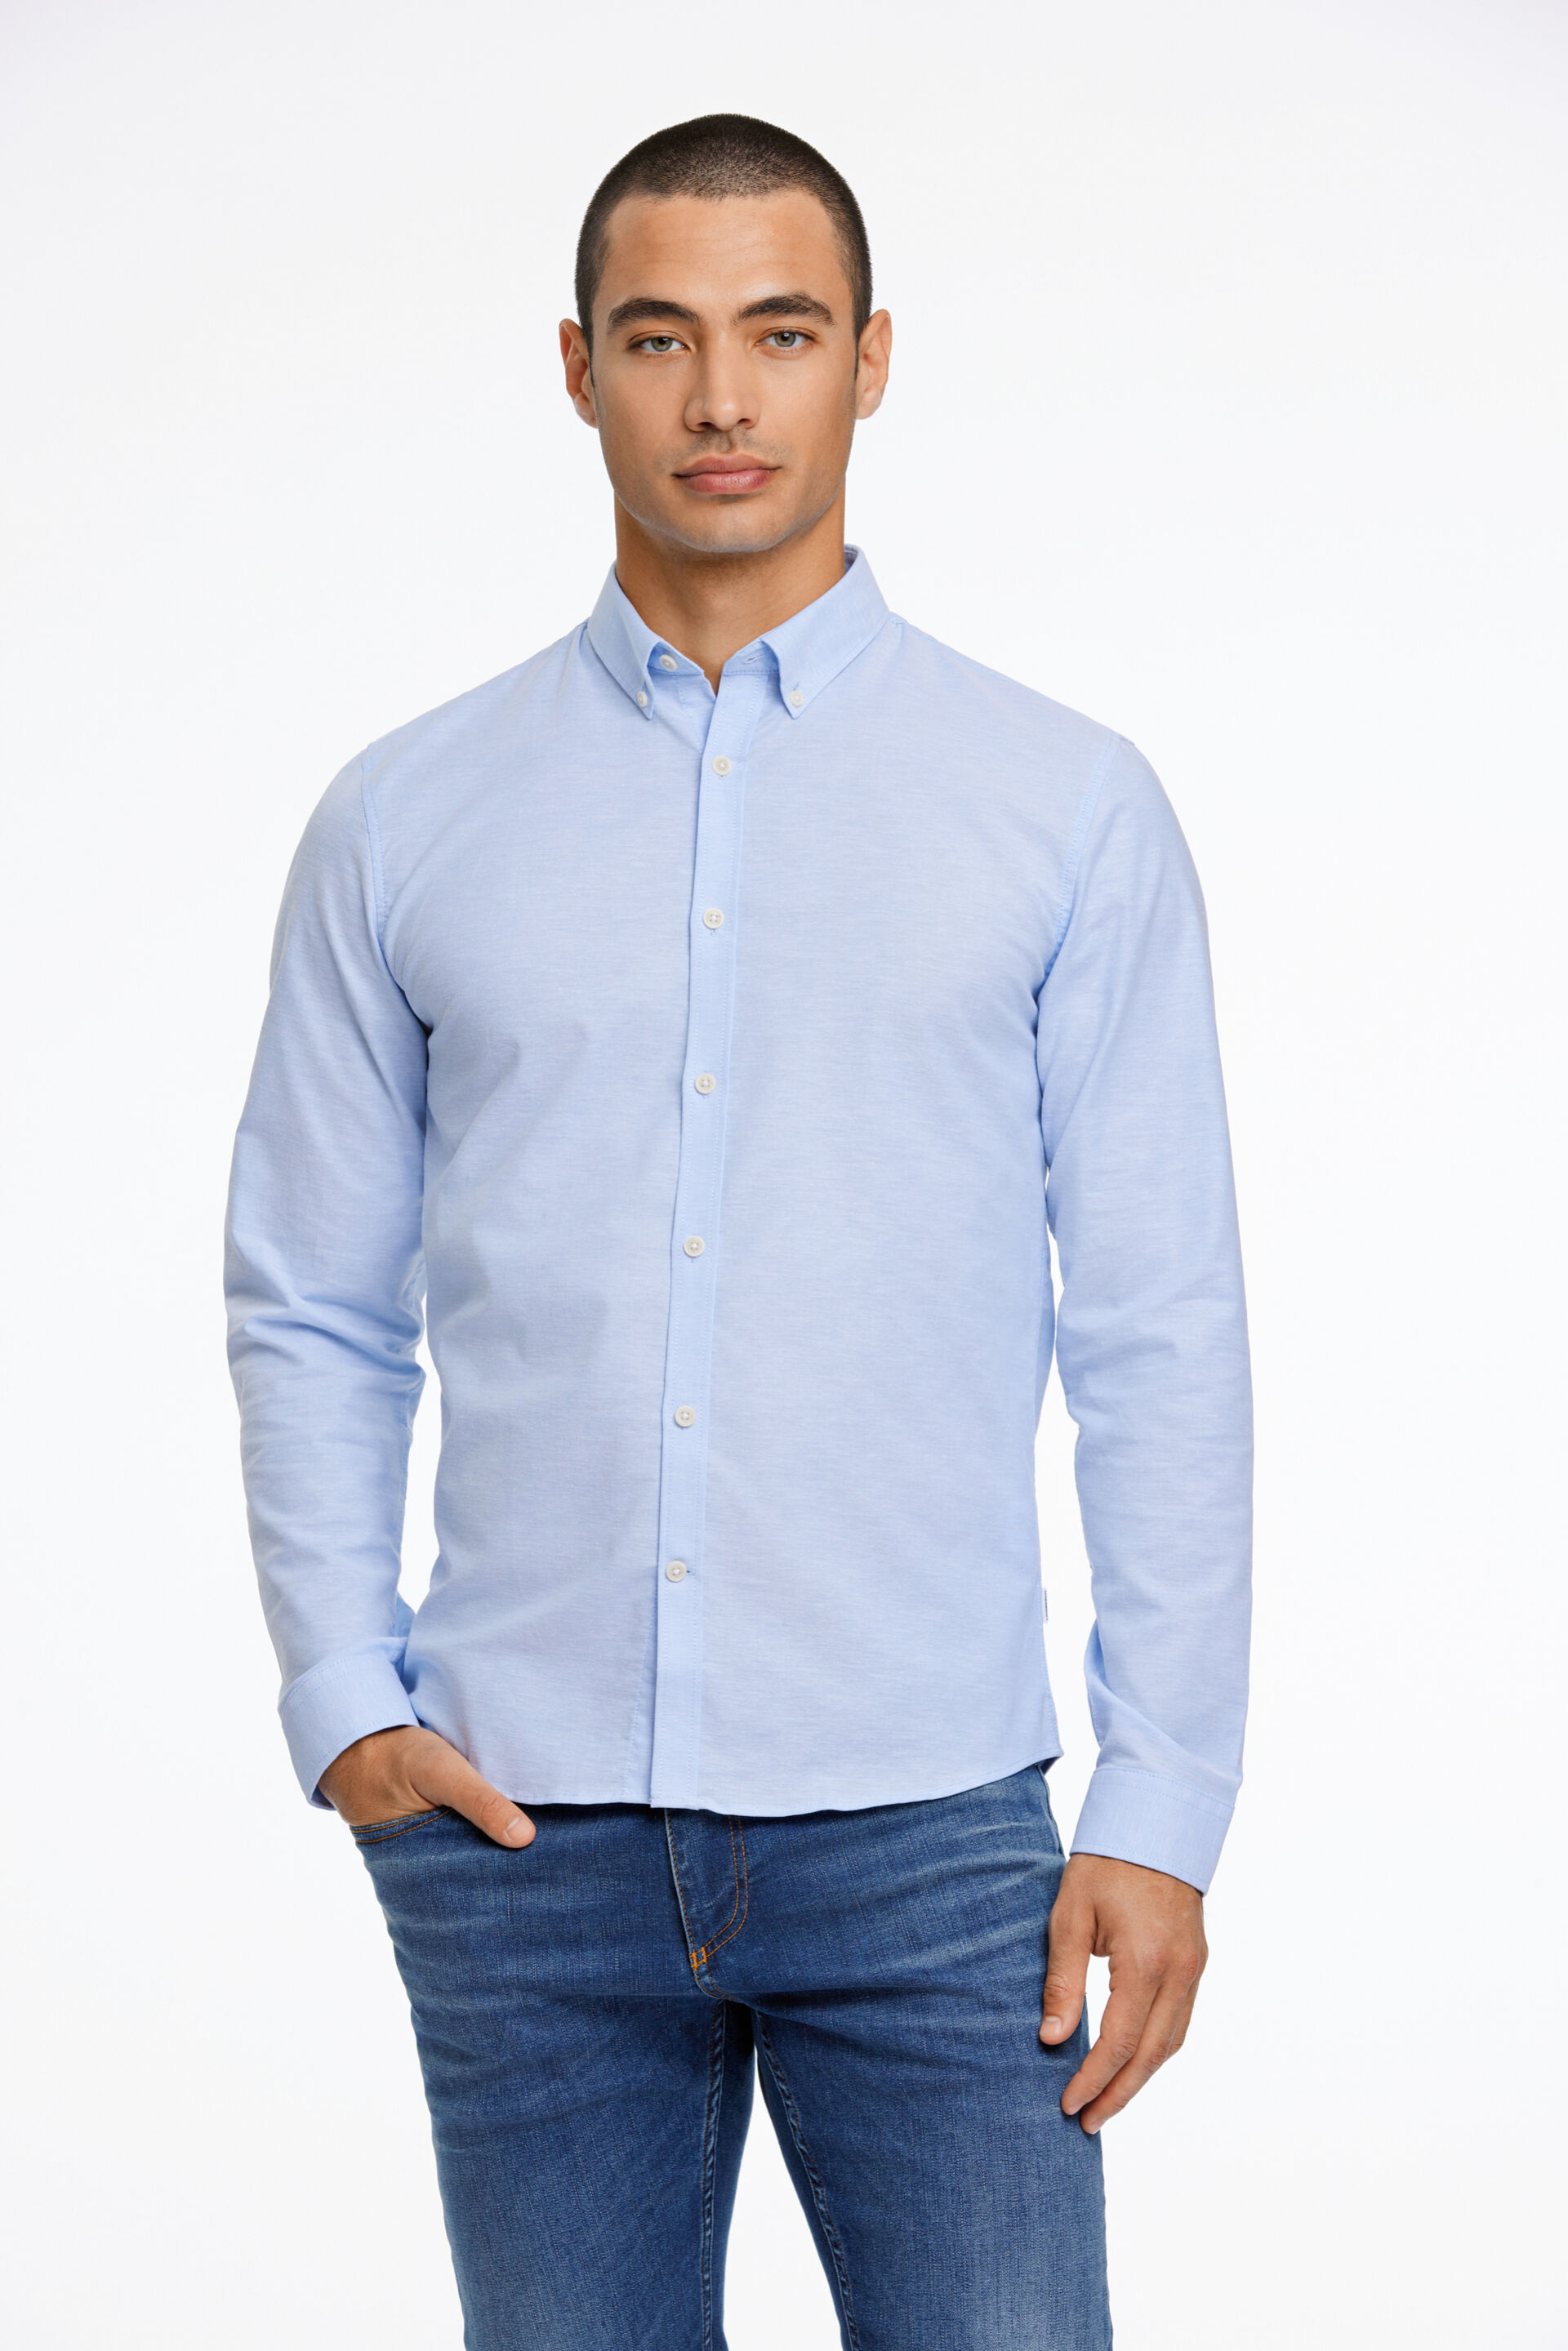 Oxfordskjorta Oxfordskjorta Blå 30-203174BK